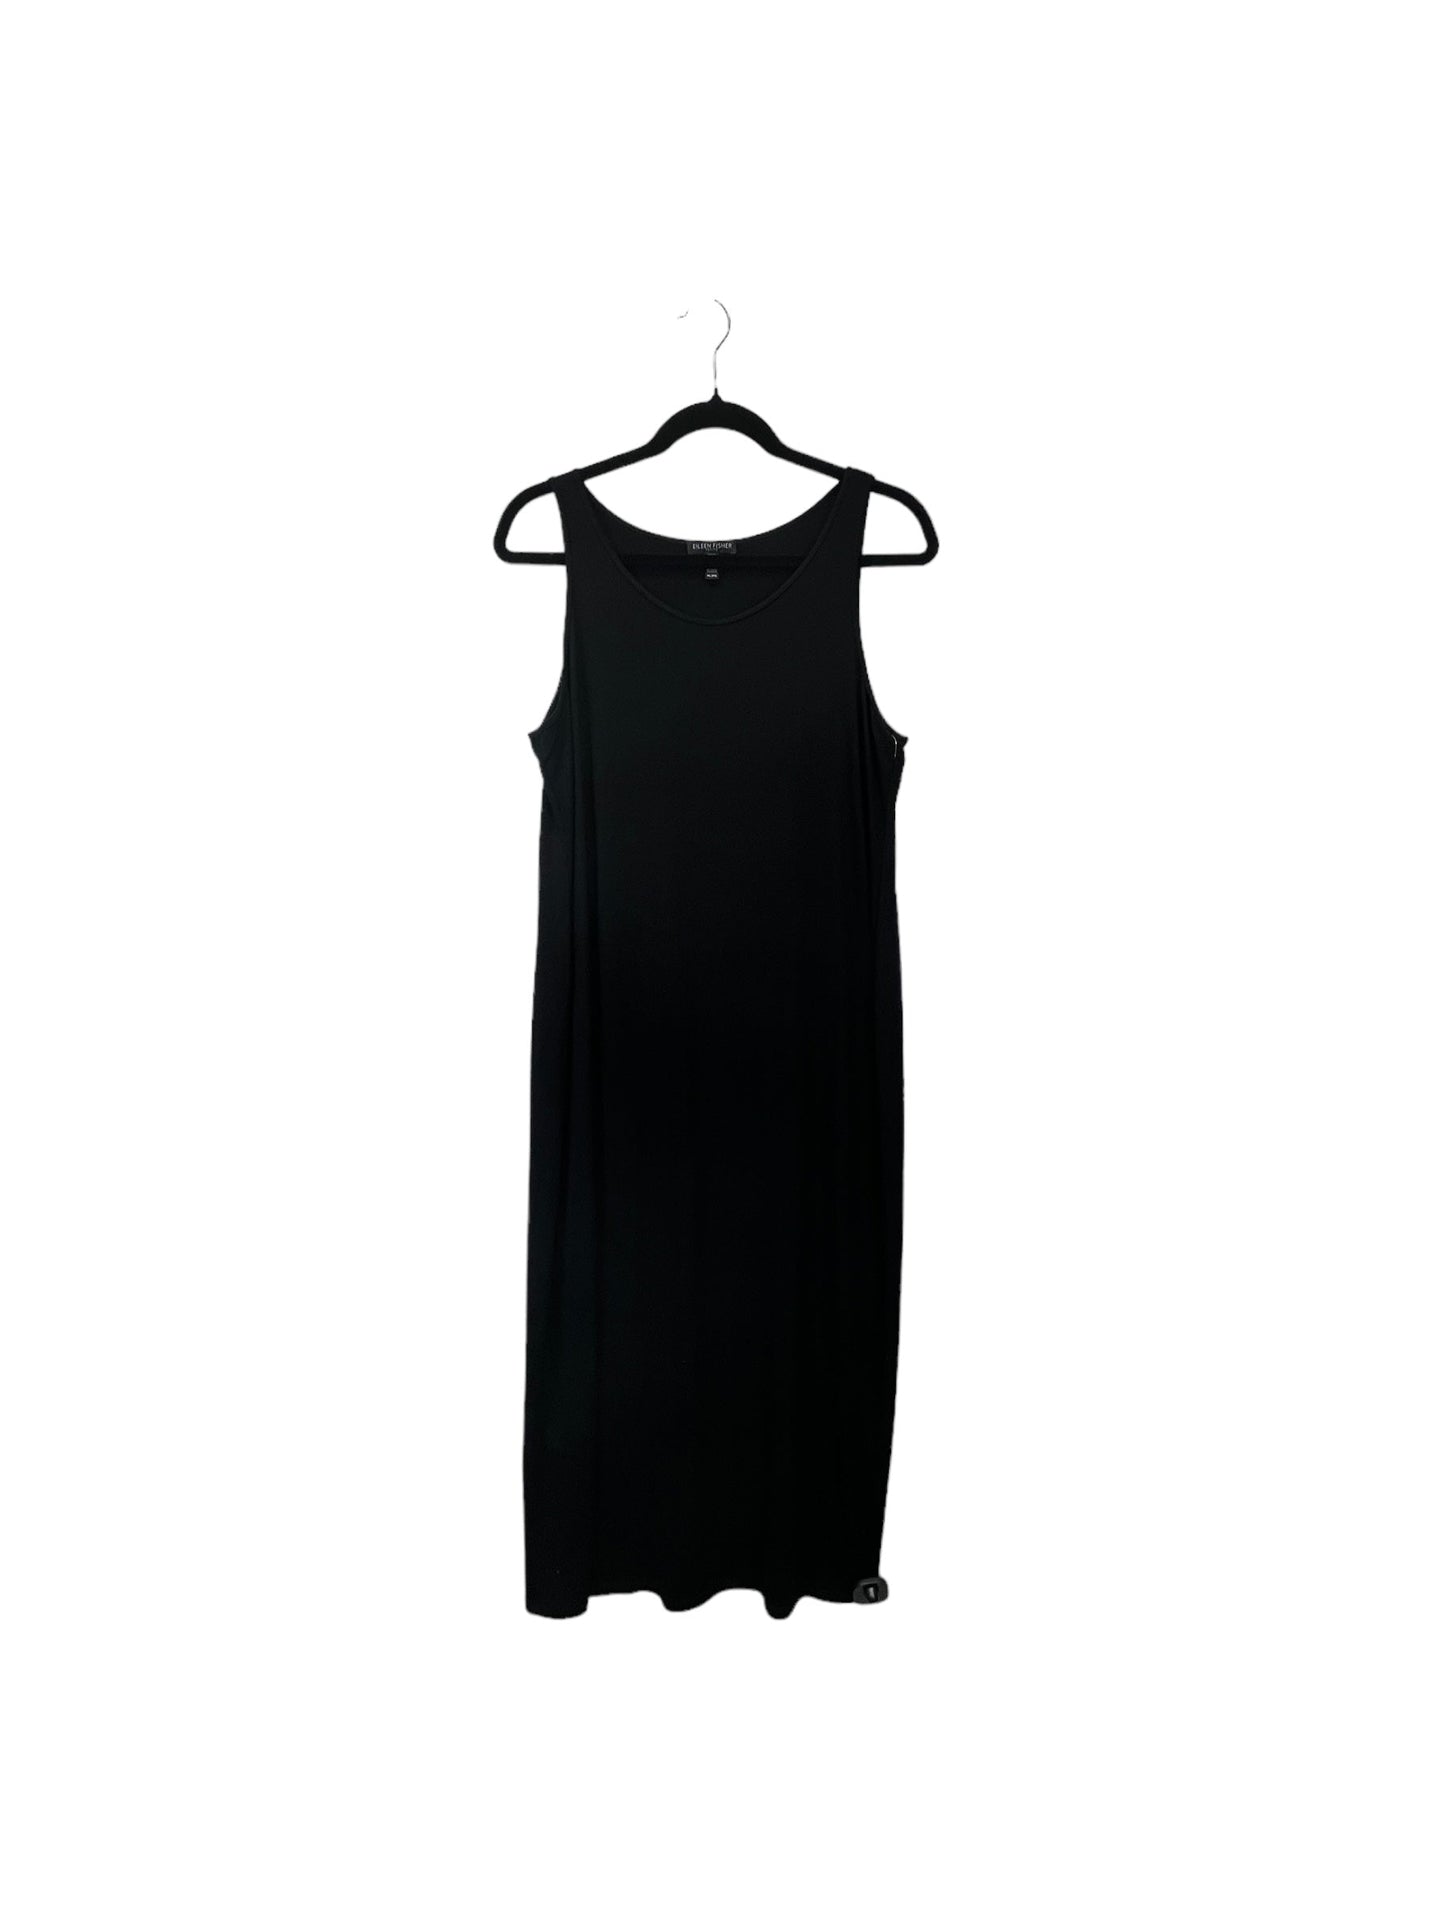 Black Dress Designer Eileen Fisher, Size Petite L